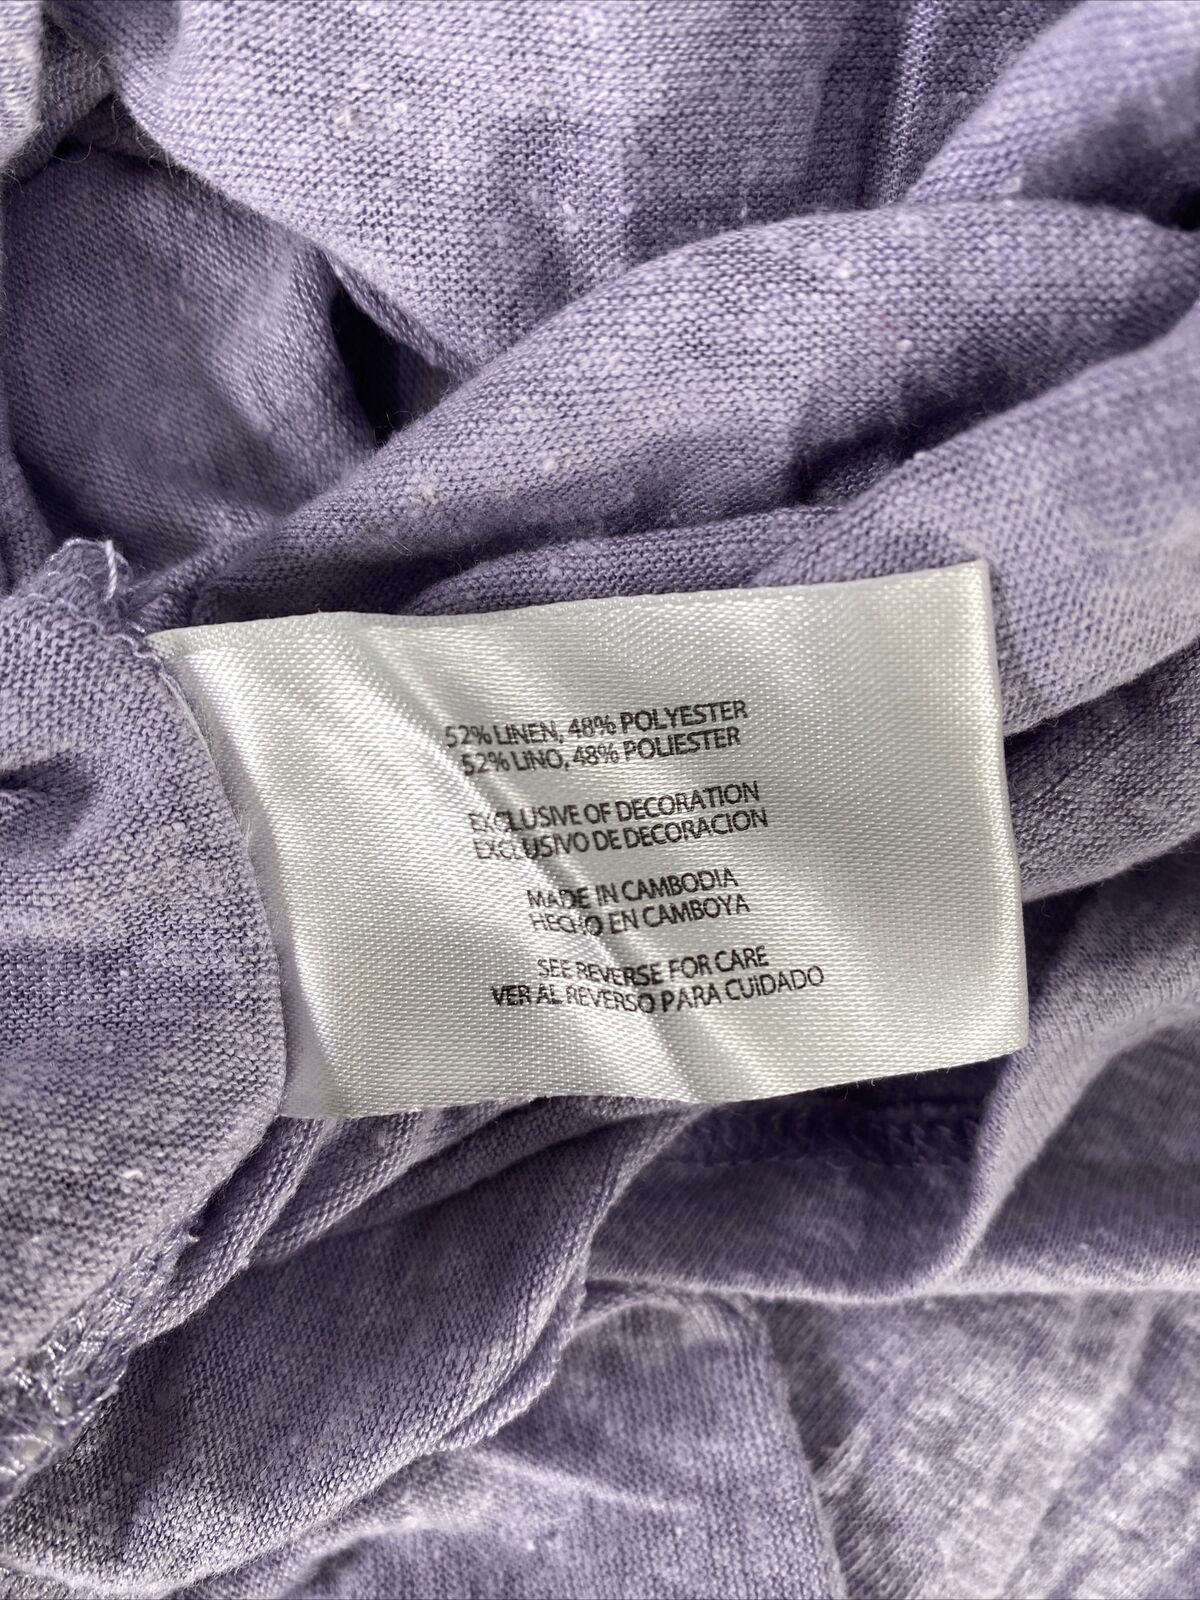 Orvis Women's Purple 3/4 Sleeve V-Neck T-Shirt - XL